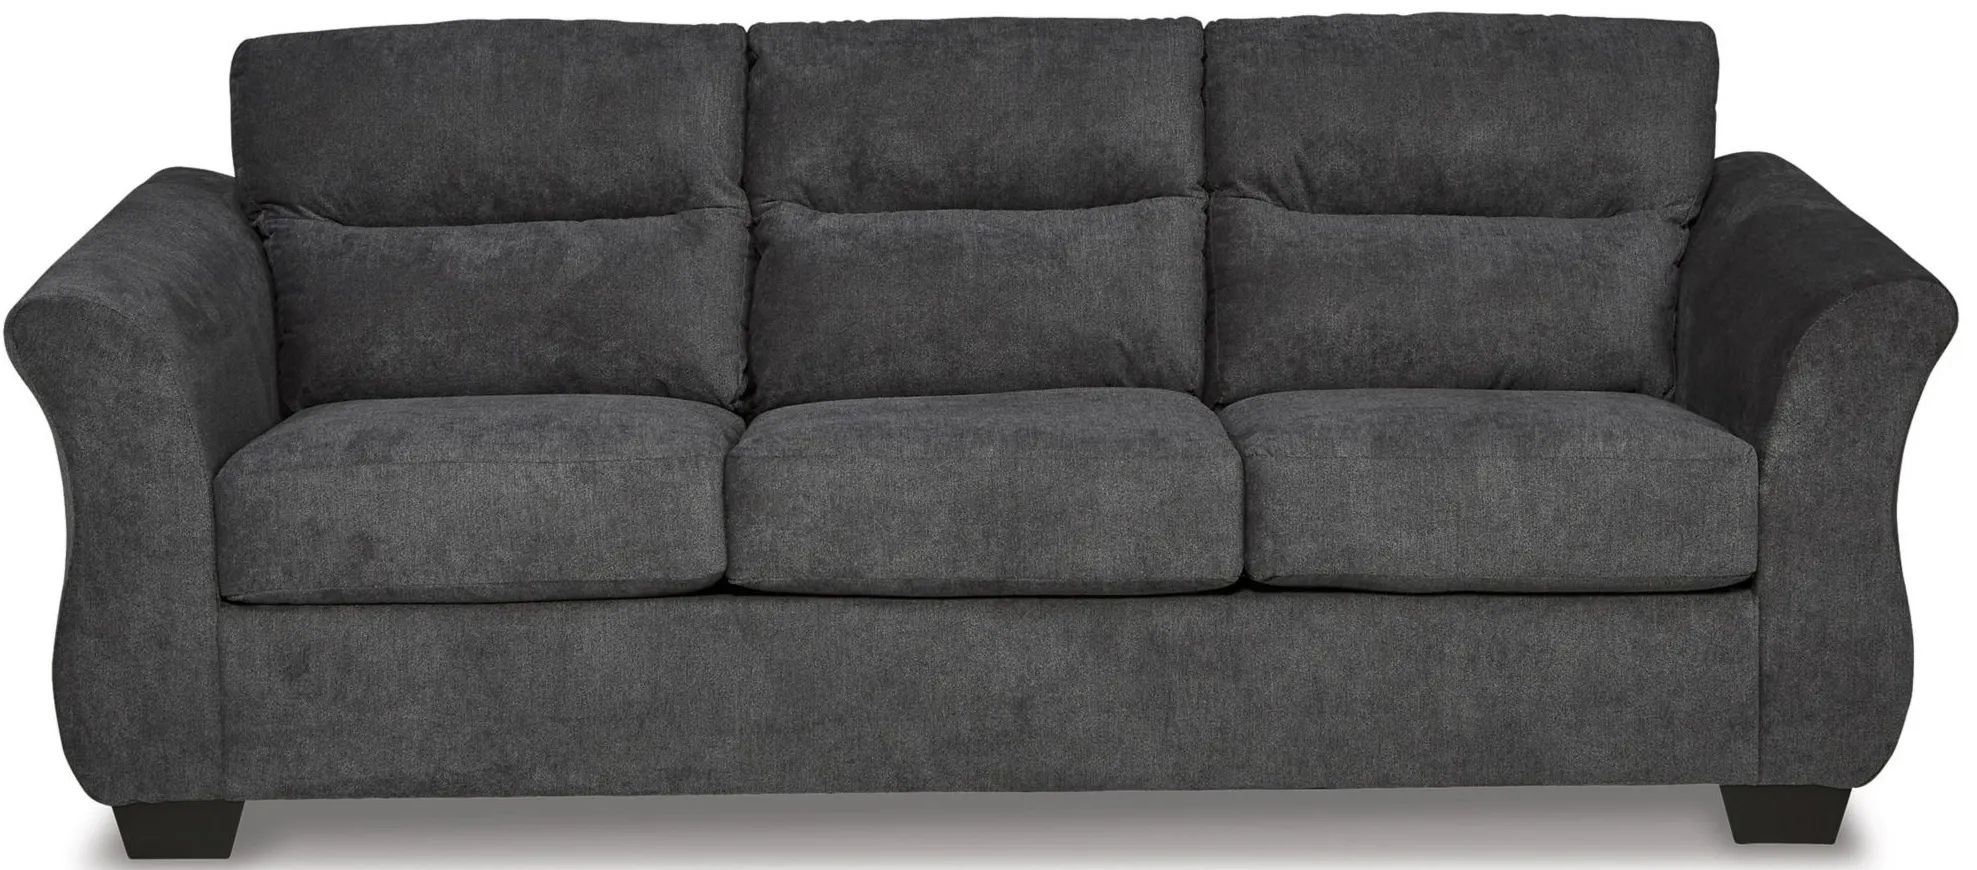 Miravel Sofa in Gunmetal by Ashley Furniture